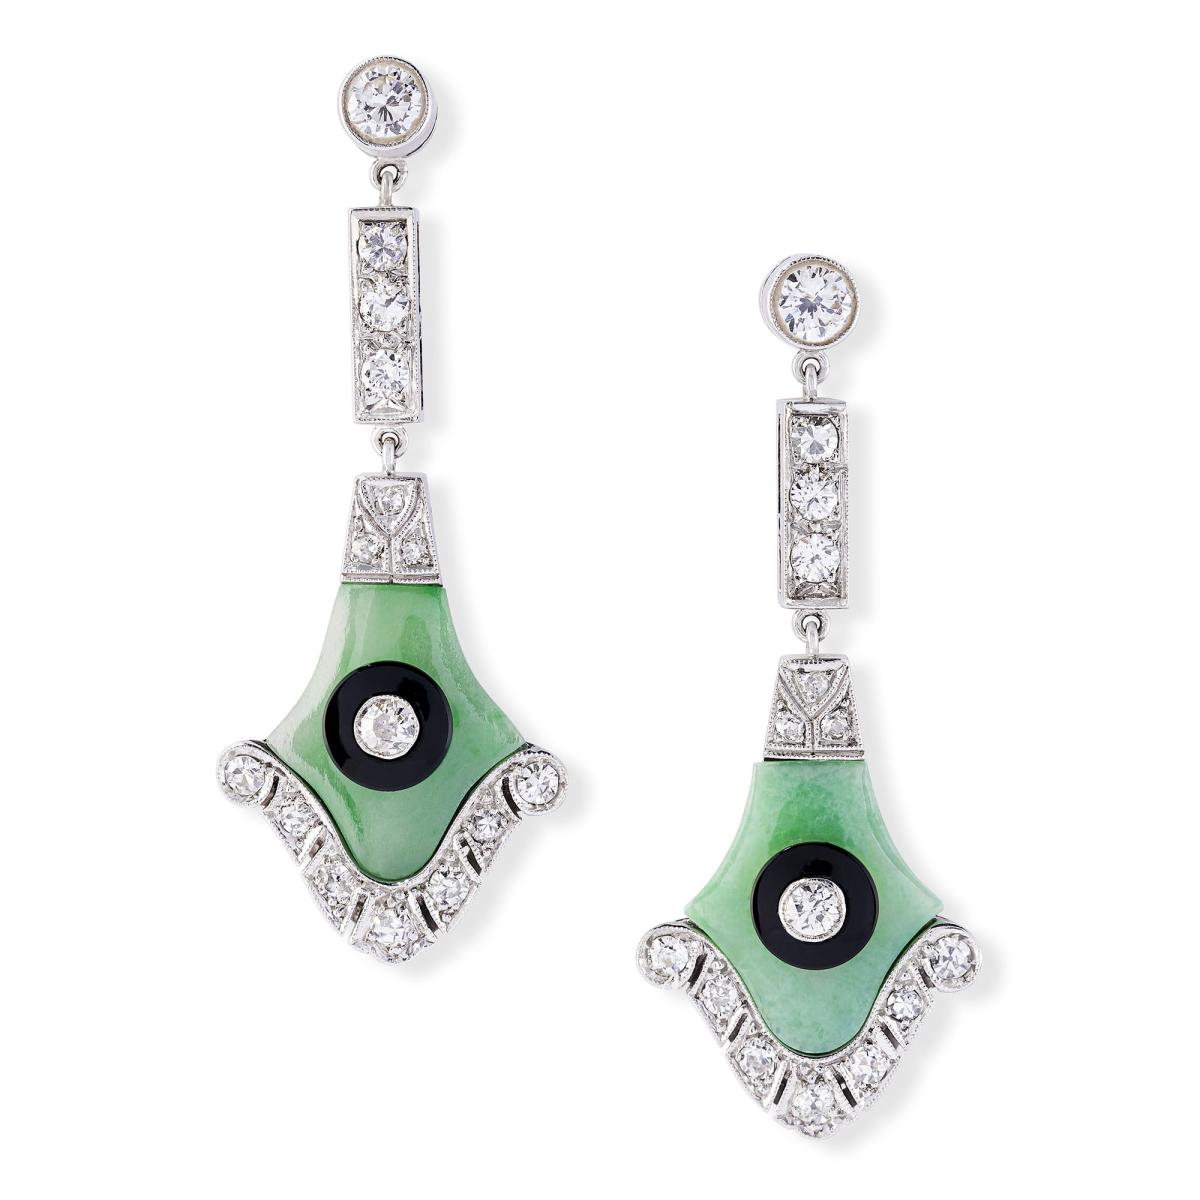 Jade, onyx and diamond drop earrings